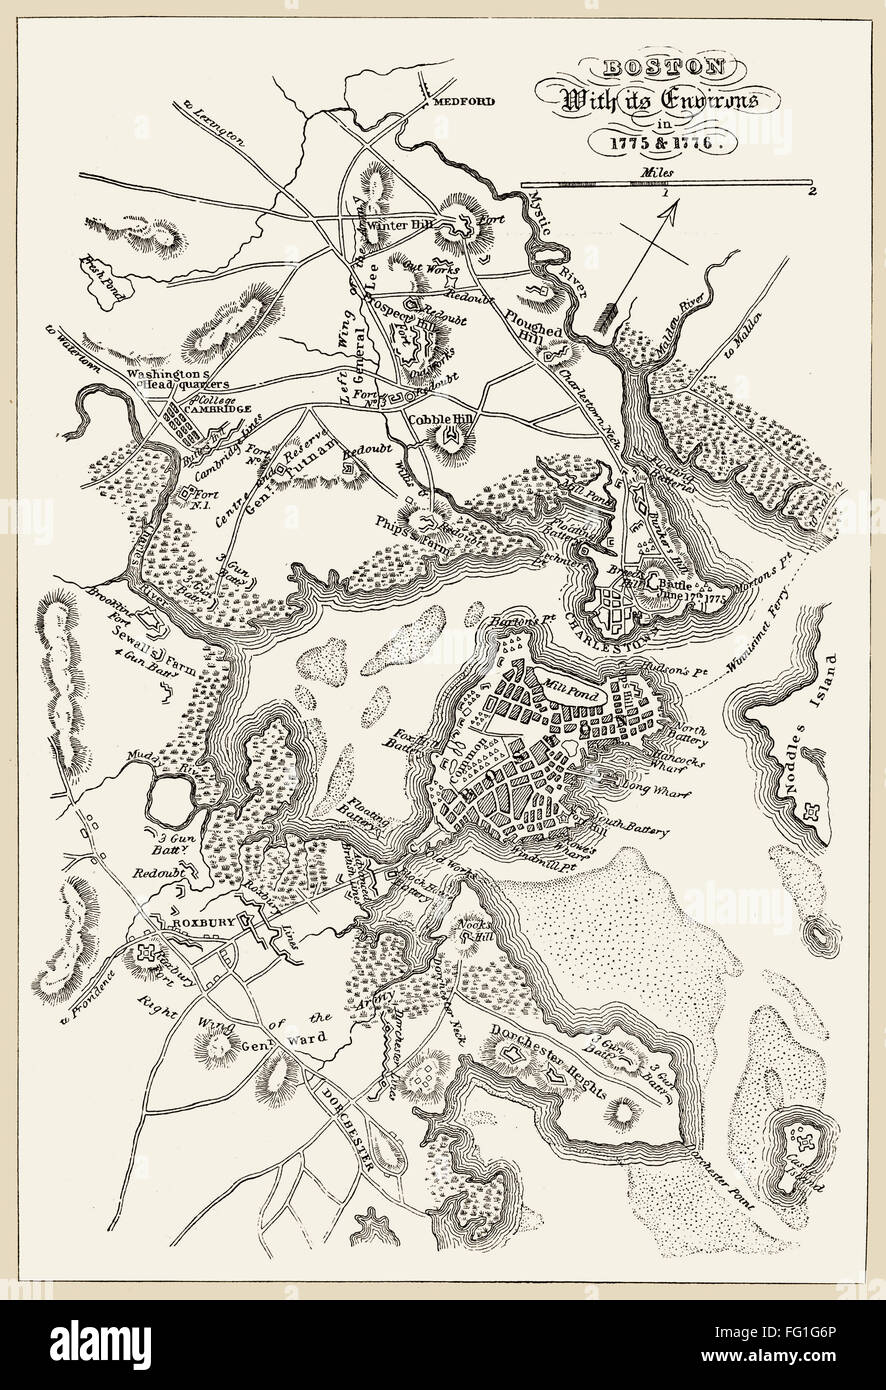 BOSTON: MAP, 1775-1776. /nMap of Boston, Massachusetts, and the surrounding area, 1775-1776. Line engraving, 19th century. Stock Photo